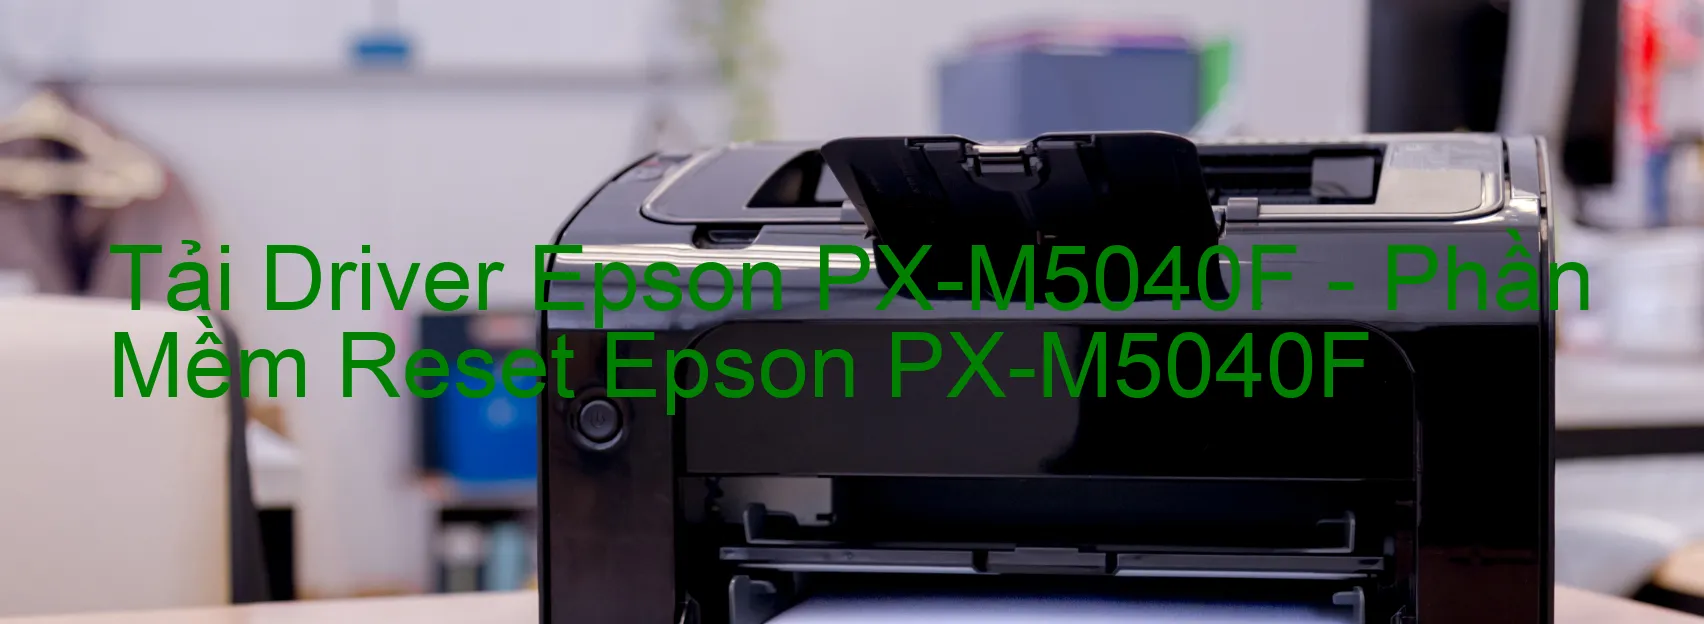 Driver Epson PX-M5040F, Phần Mềm Reset Epson PX-M5040F